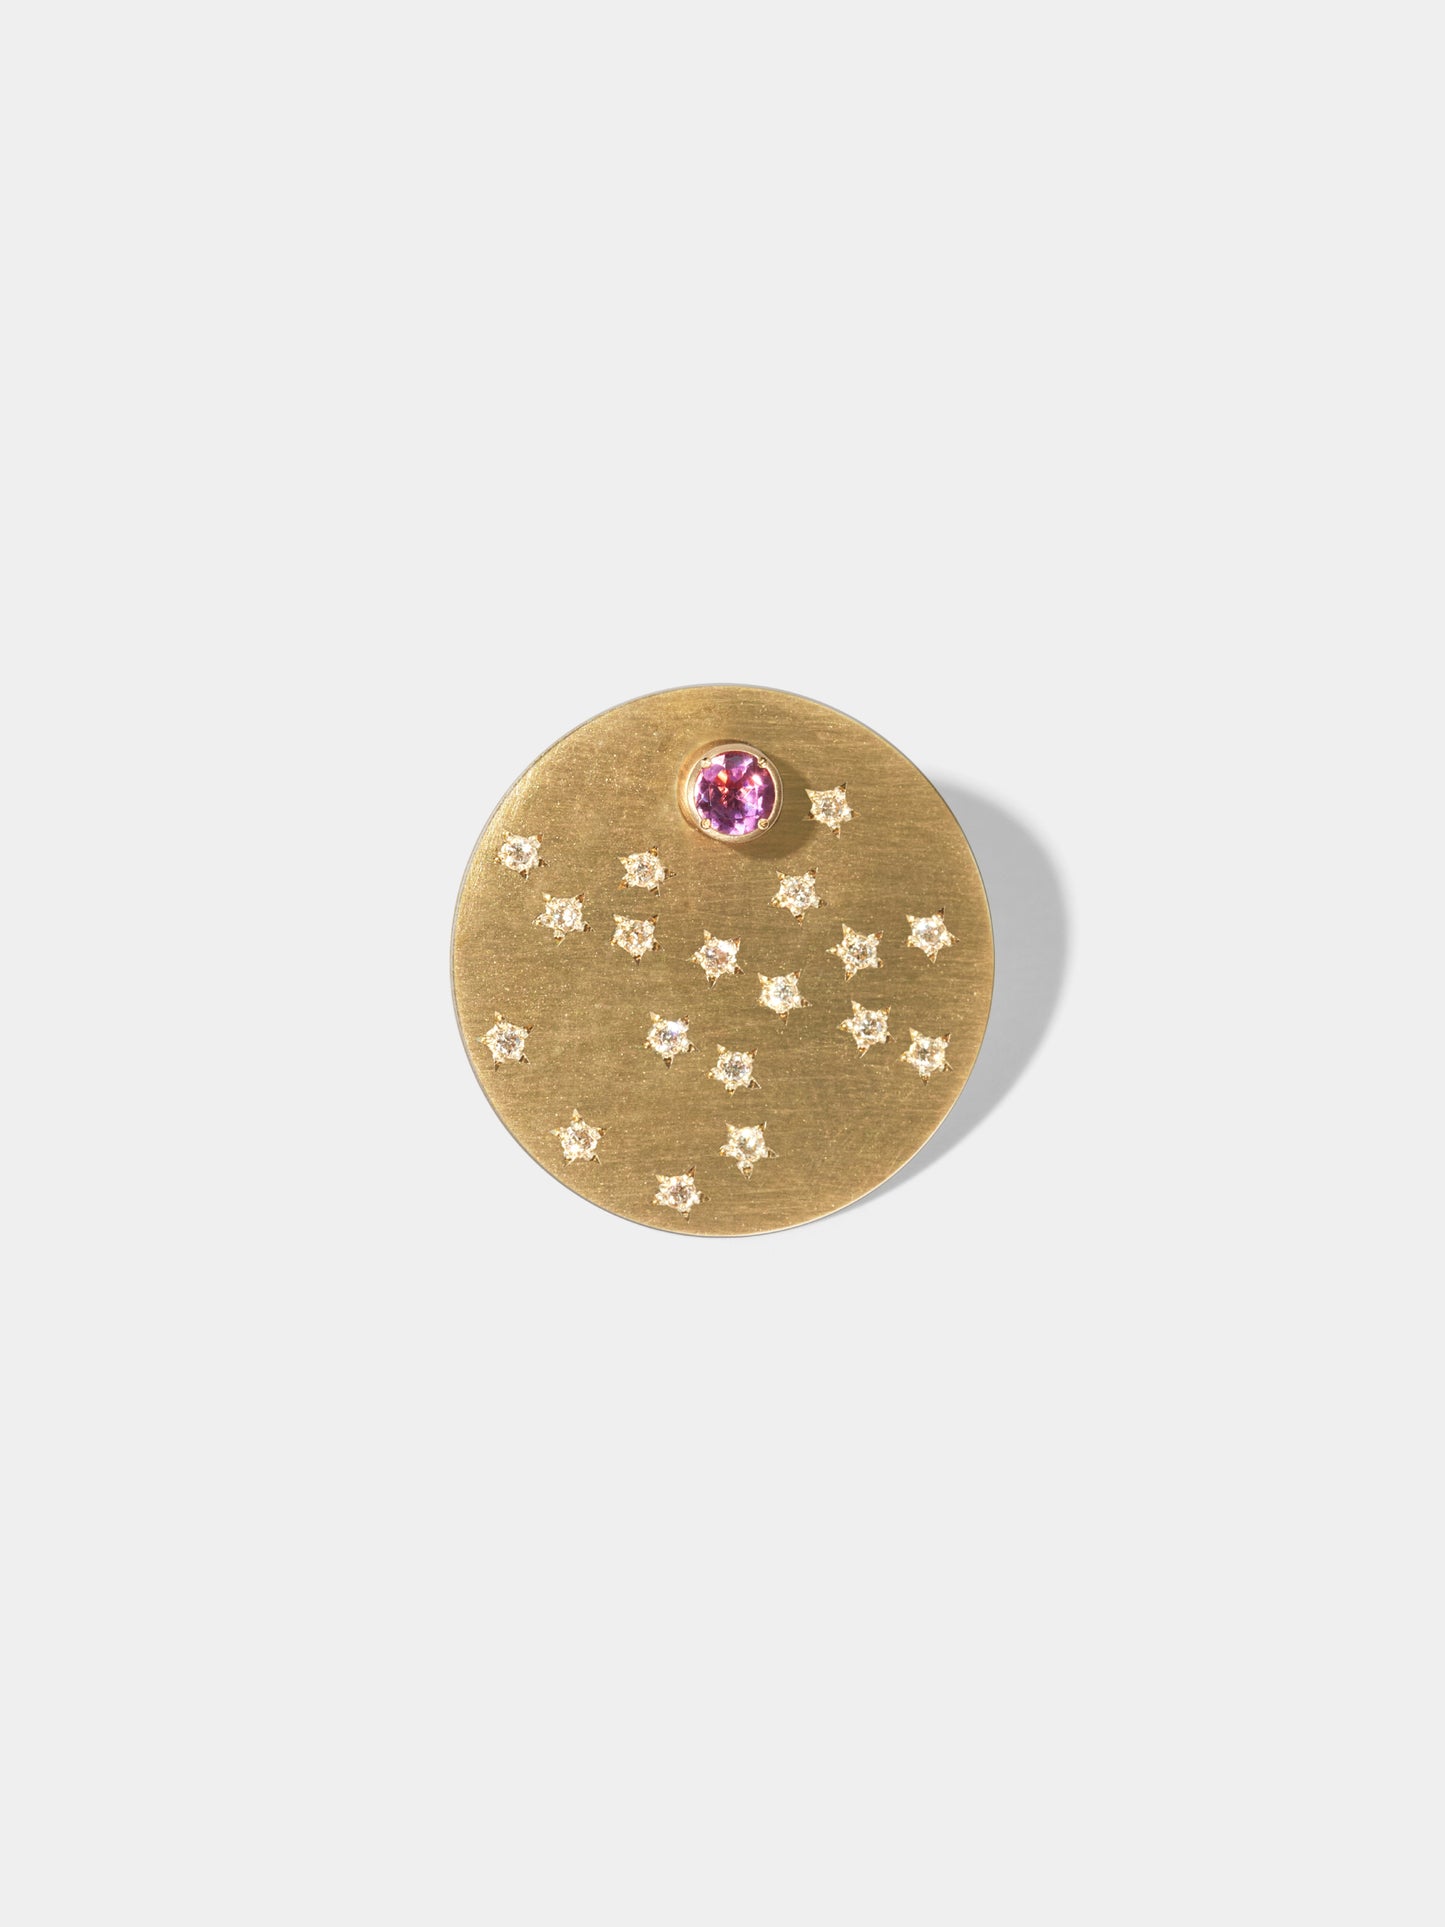 ASTERISM_Pierced Earring_Sagittarius(射手座) / Pink Tourmaline